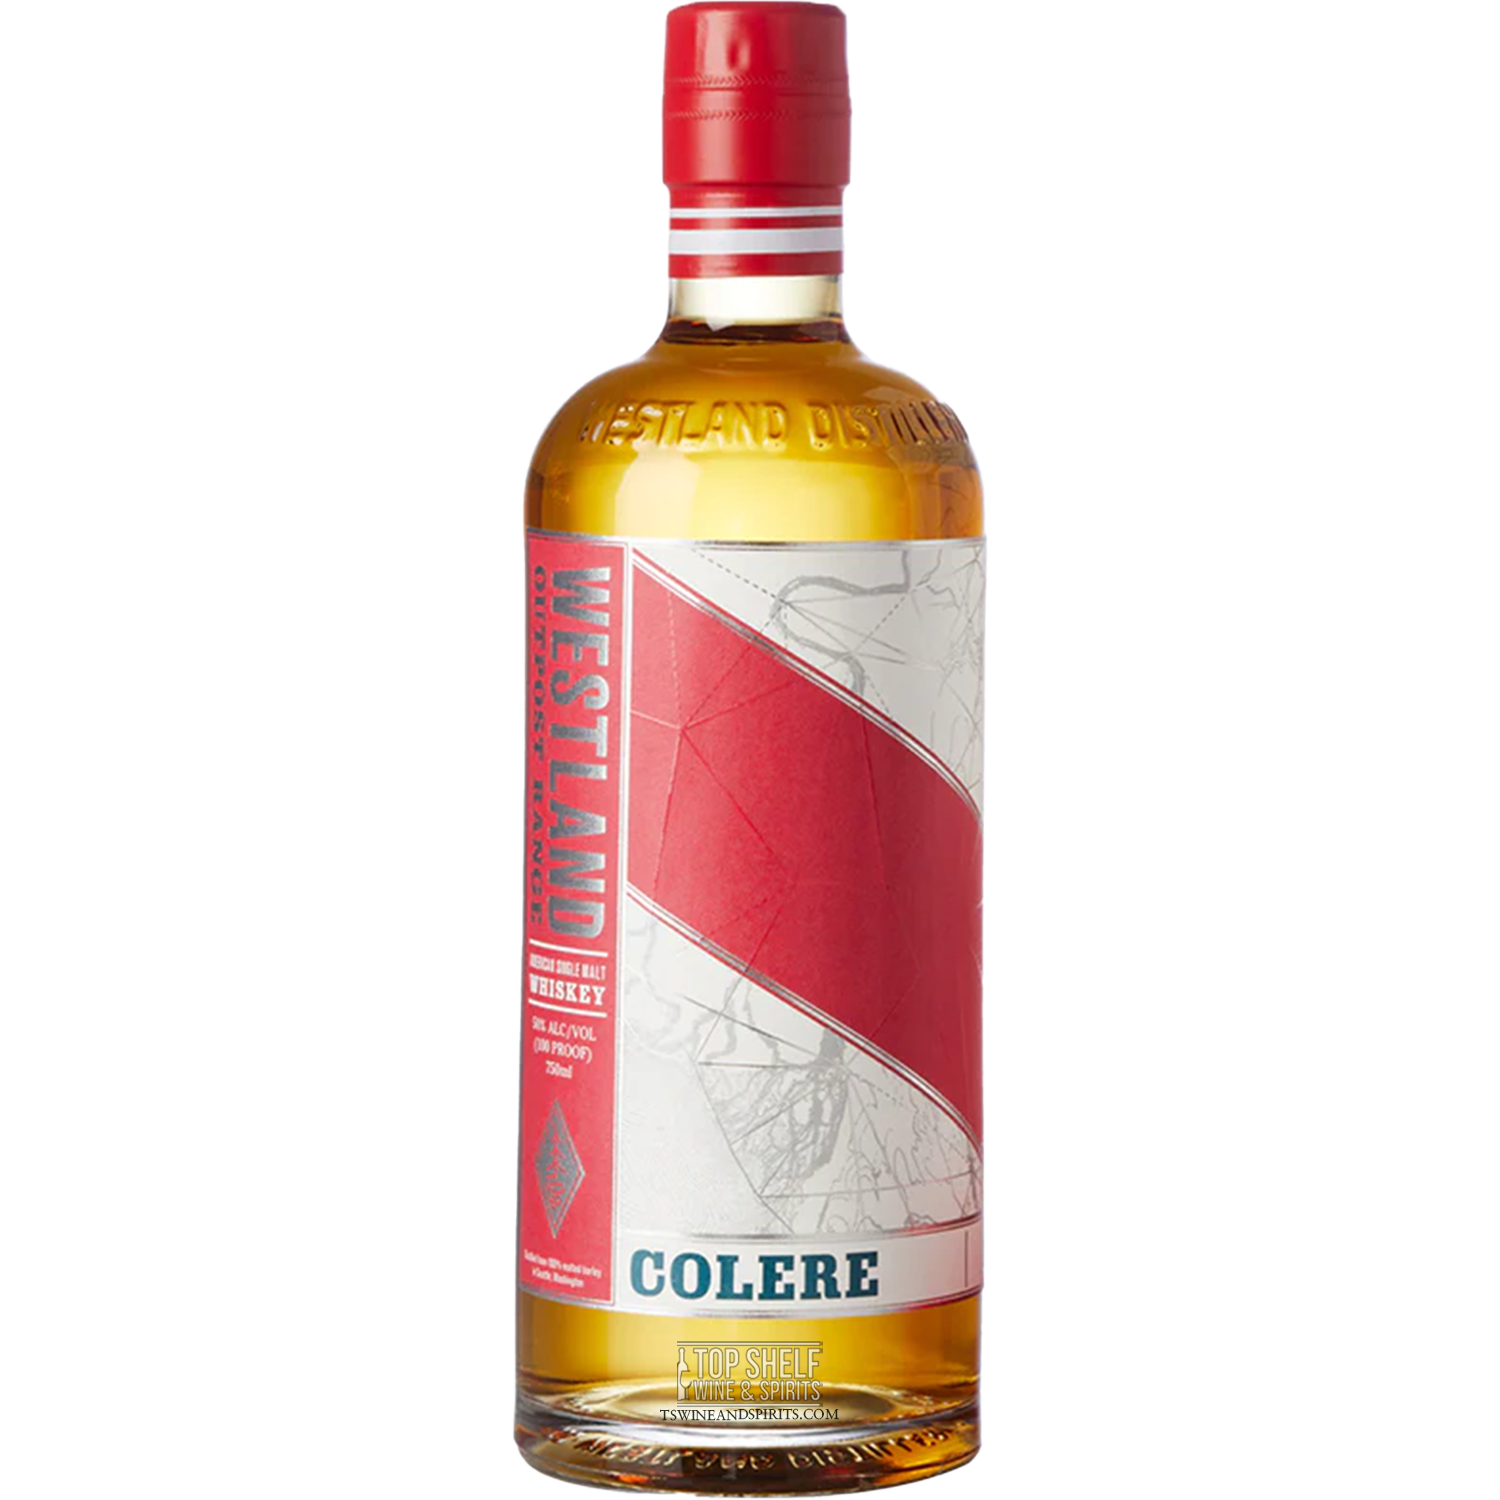 Westland Distillery Colere Edition 3 American Single Malt